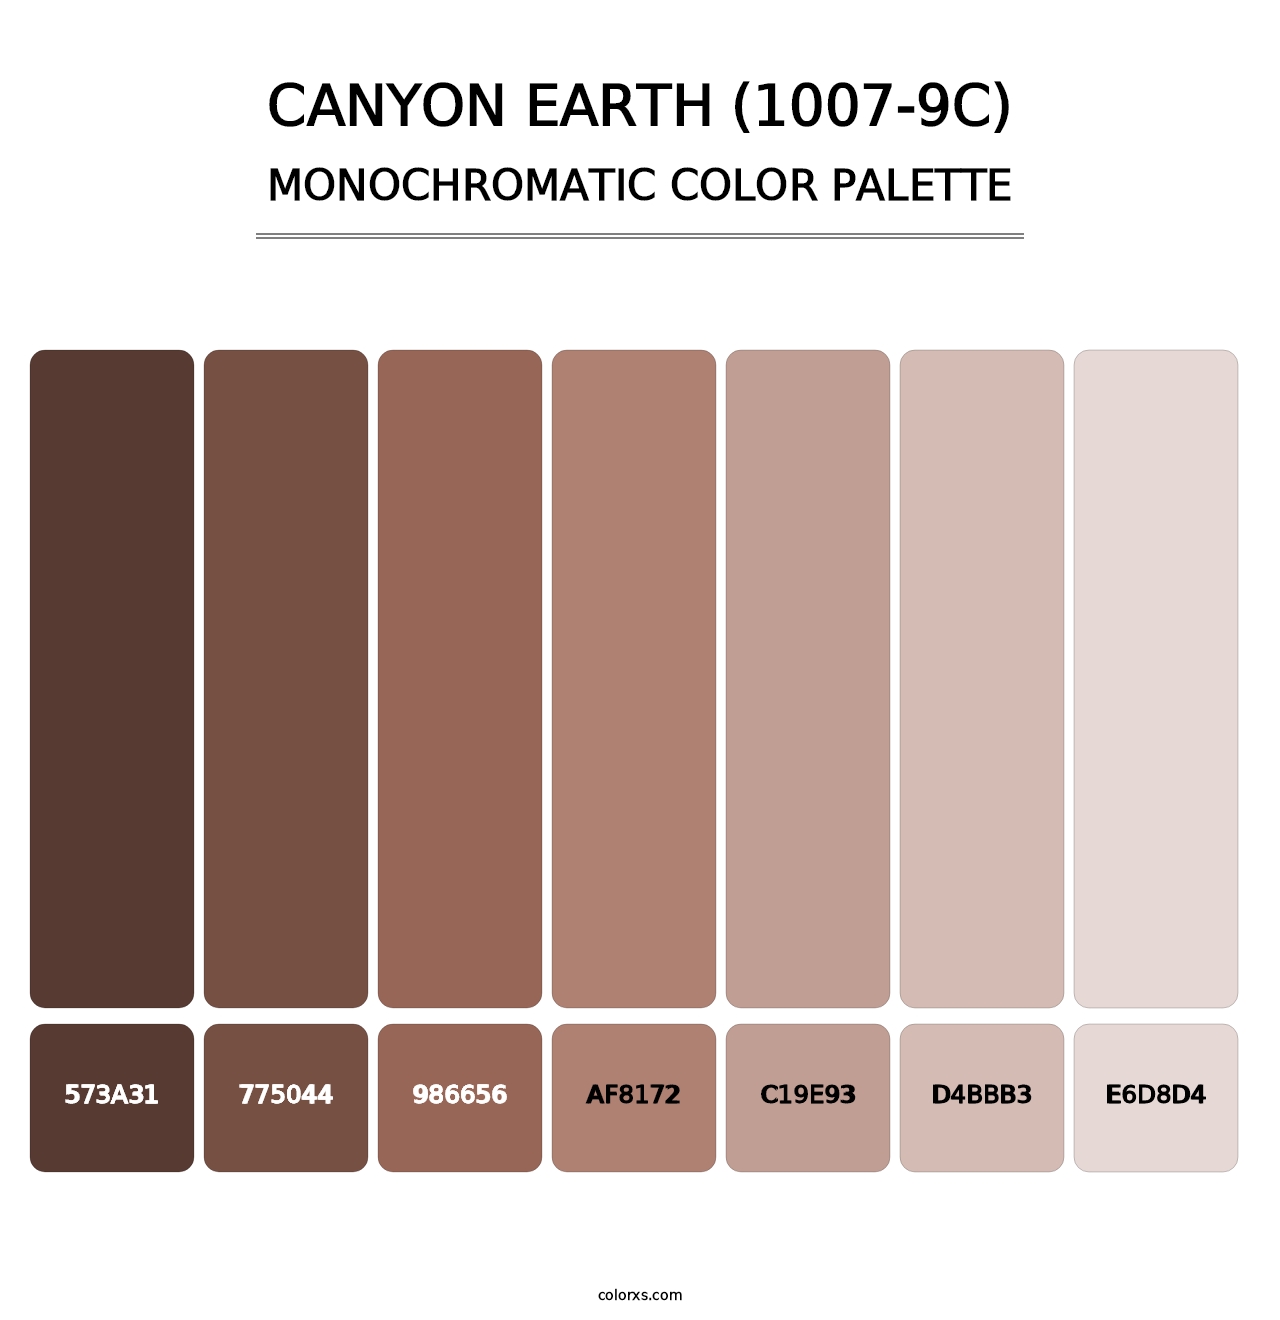 Canyon Earth (1007-9C) - Monochromatic Color Palette